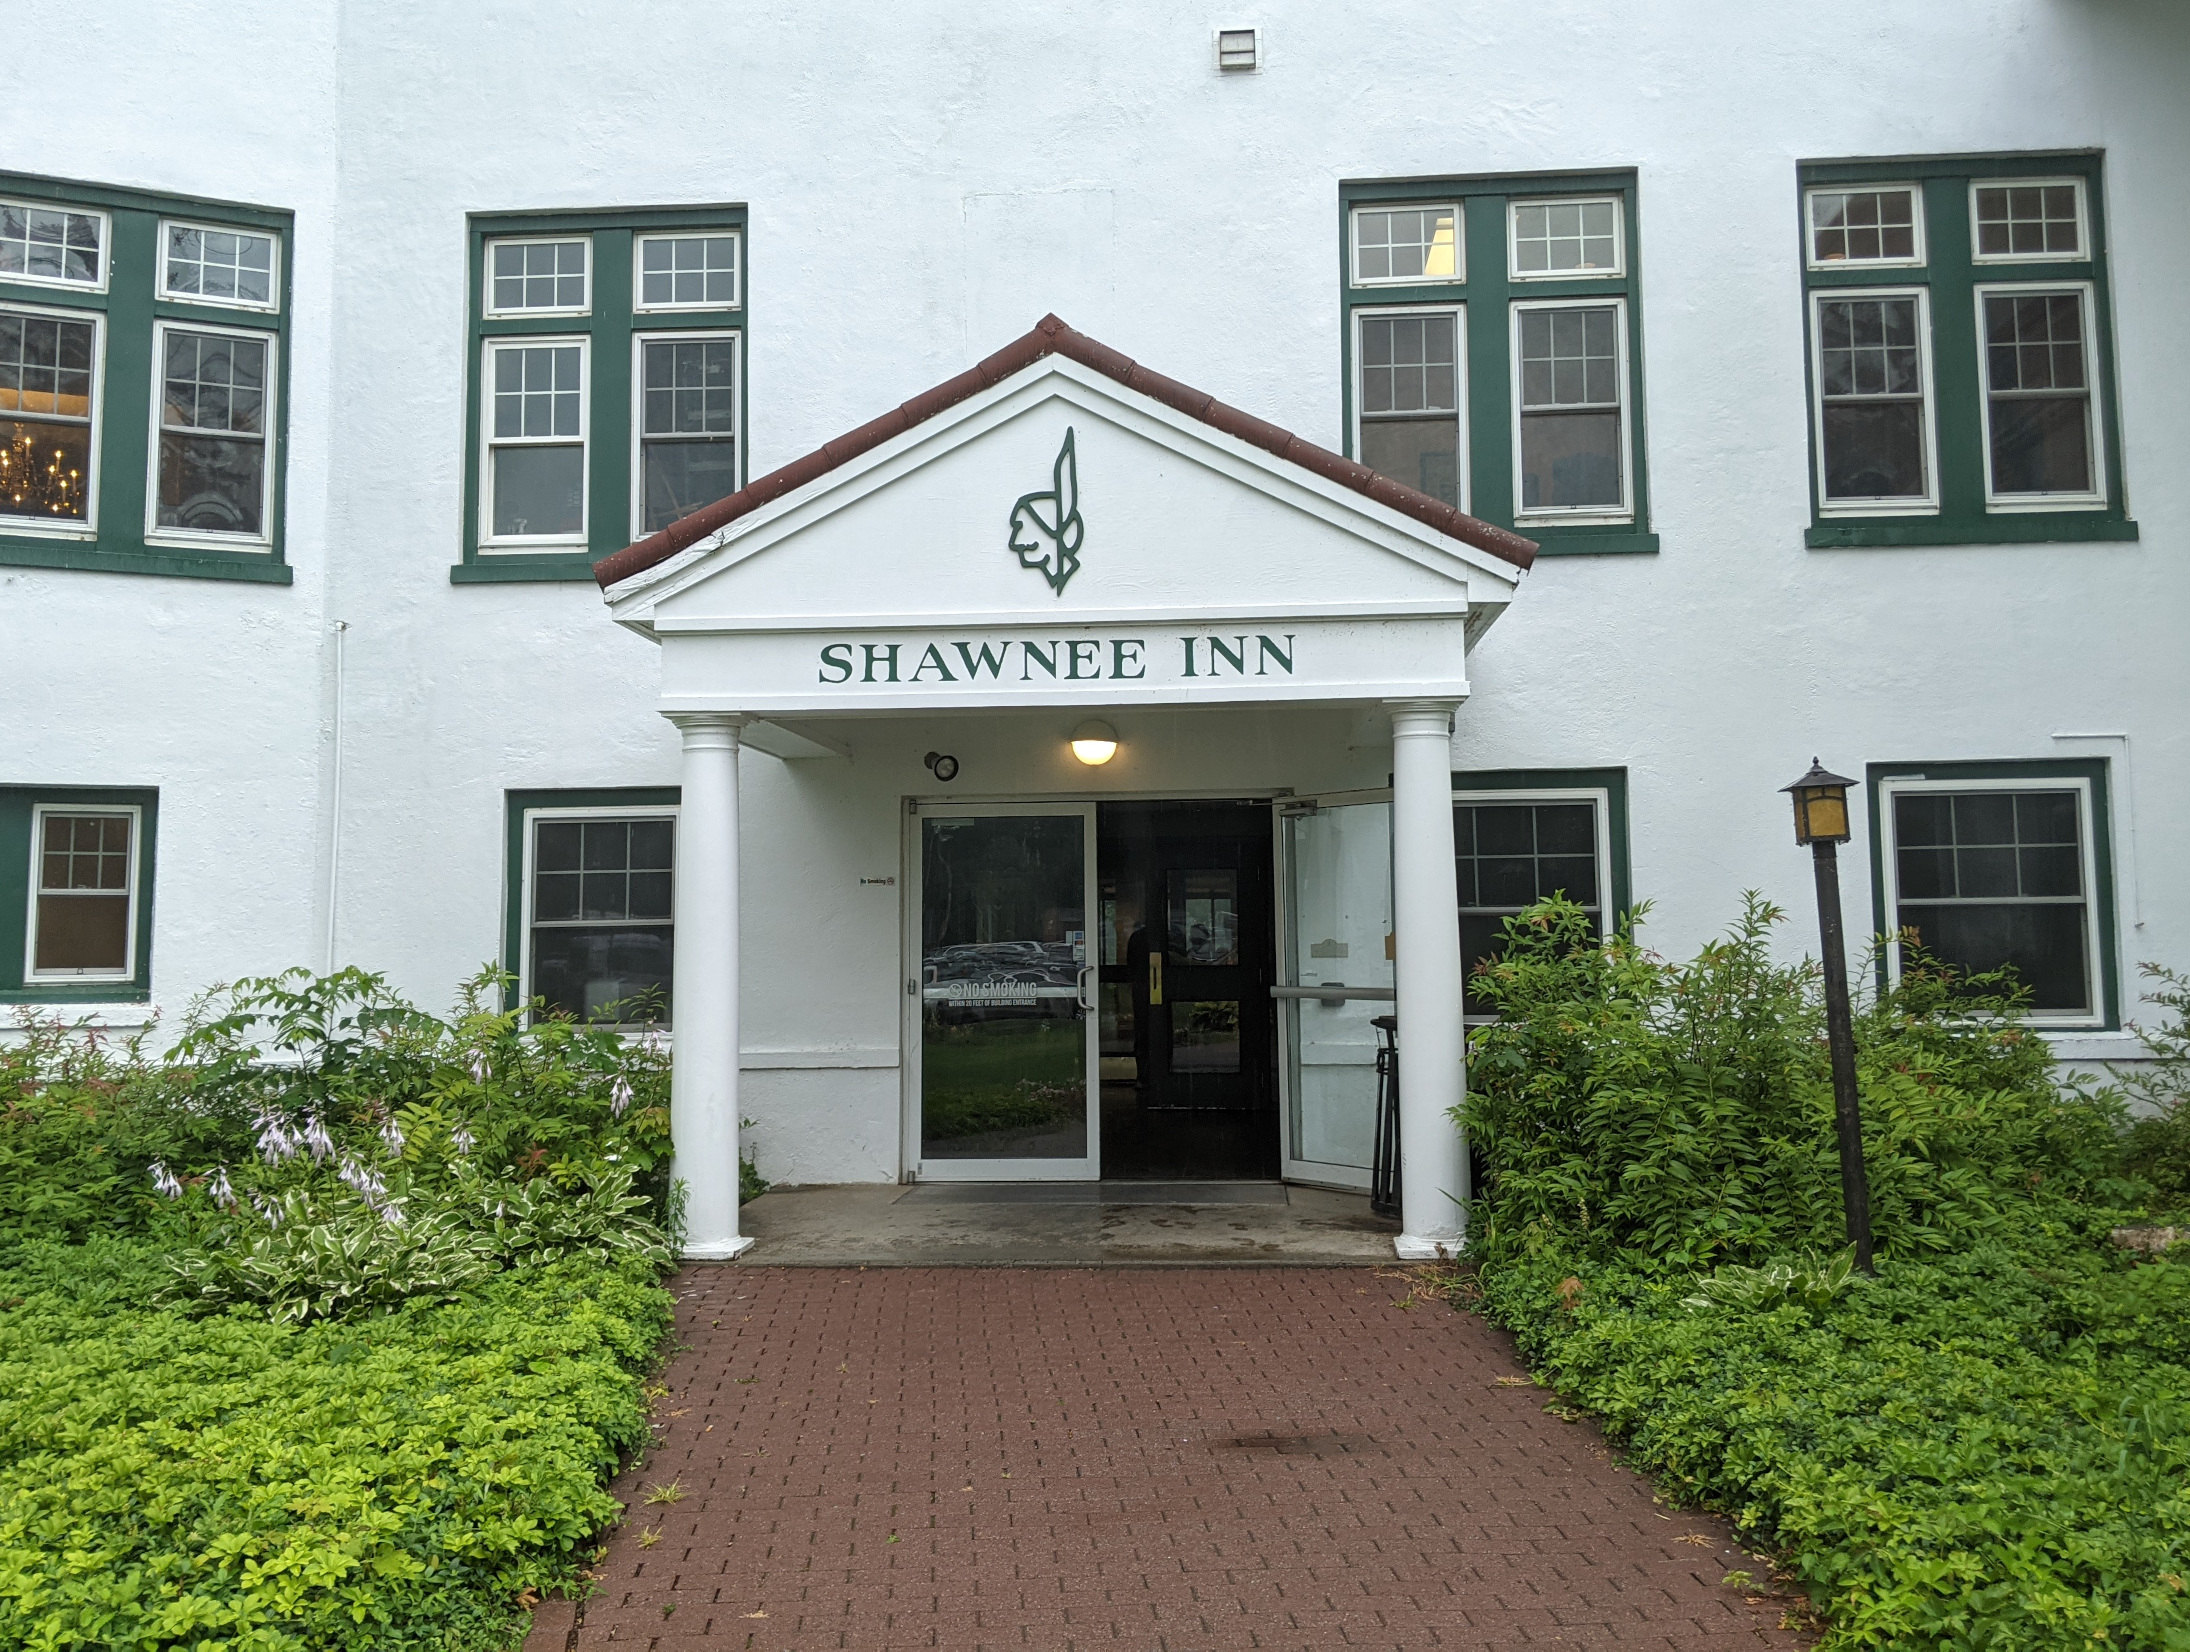 RiverFest Allows Visitors to Explore Historic Shawnee